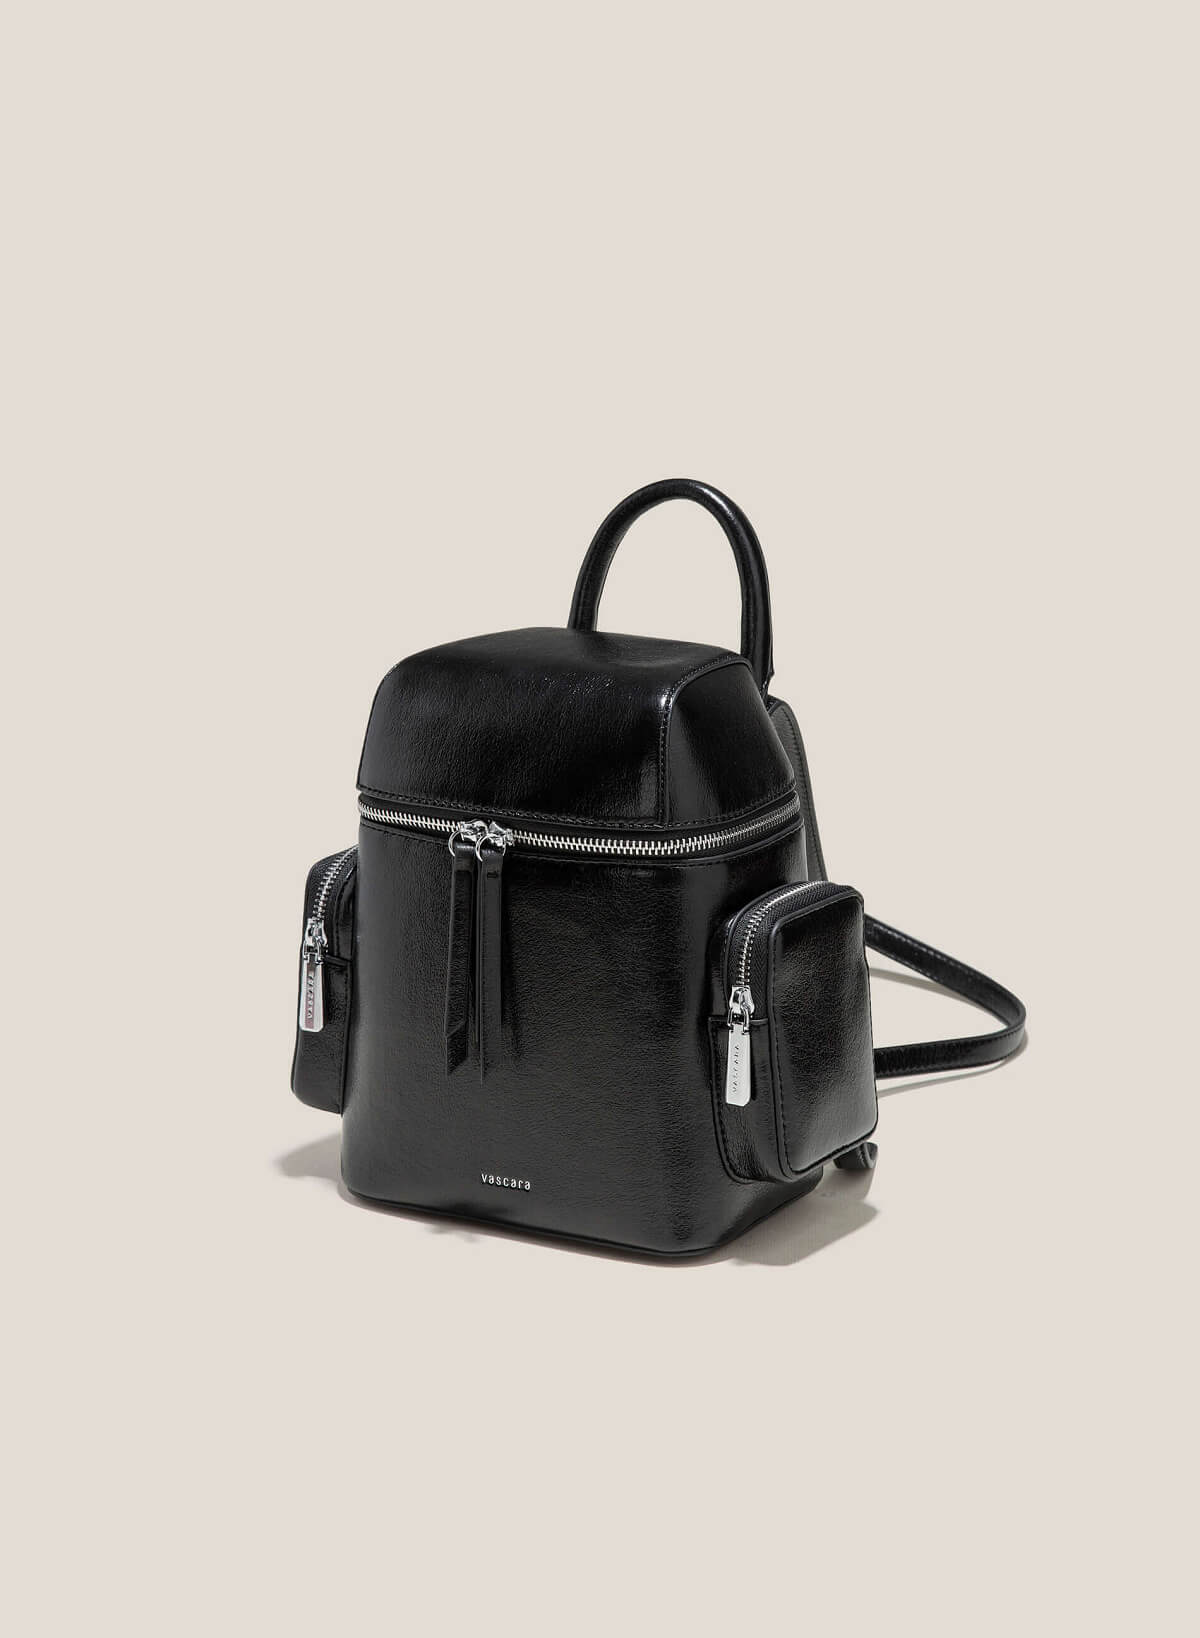 Futuristic Box Backpack - BAK 0197 - Black - vascara.com